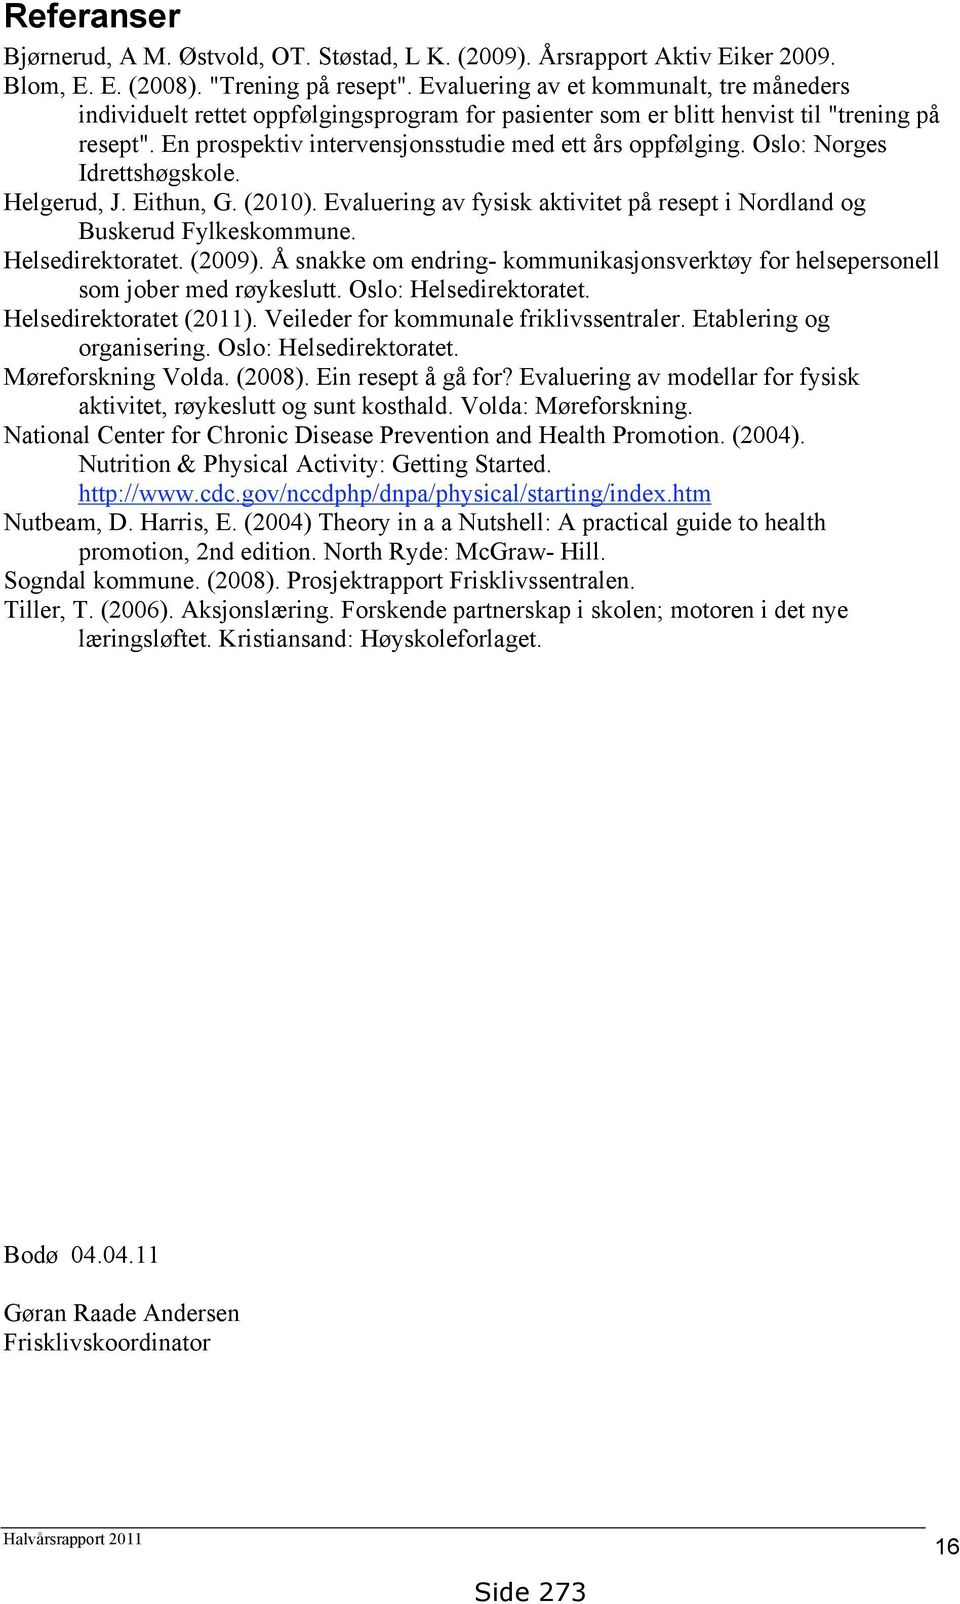 Oslo: Norges Idrettshøgskole. Helgerud, J. Eithun, G. (2010). Evaluering av fysisk aktivitet på resept i Nordland og Buskerud Fylkeskommune. Helsedirektoratet. (2009).